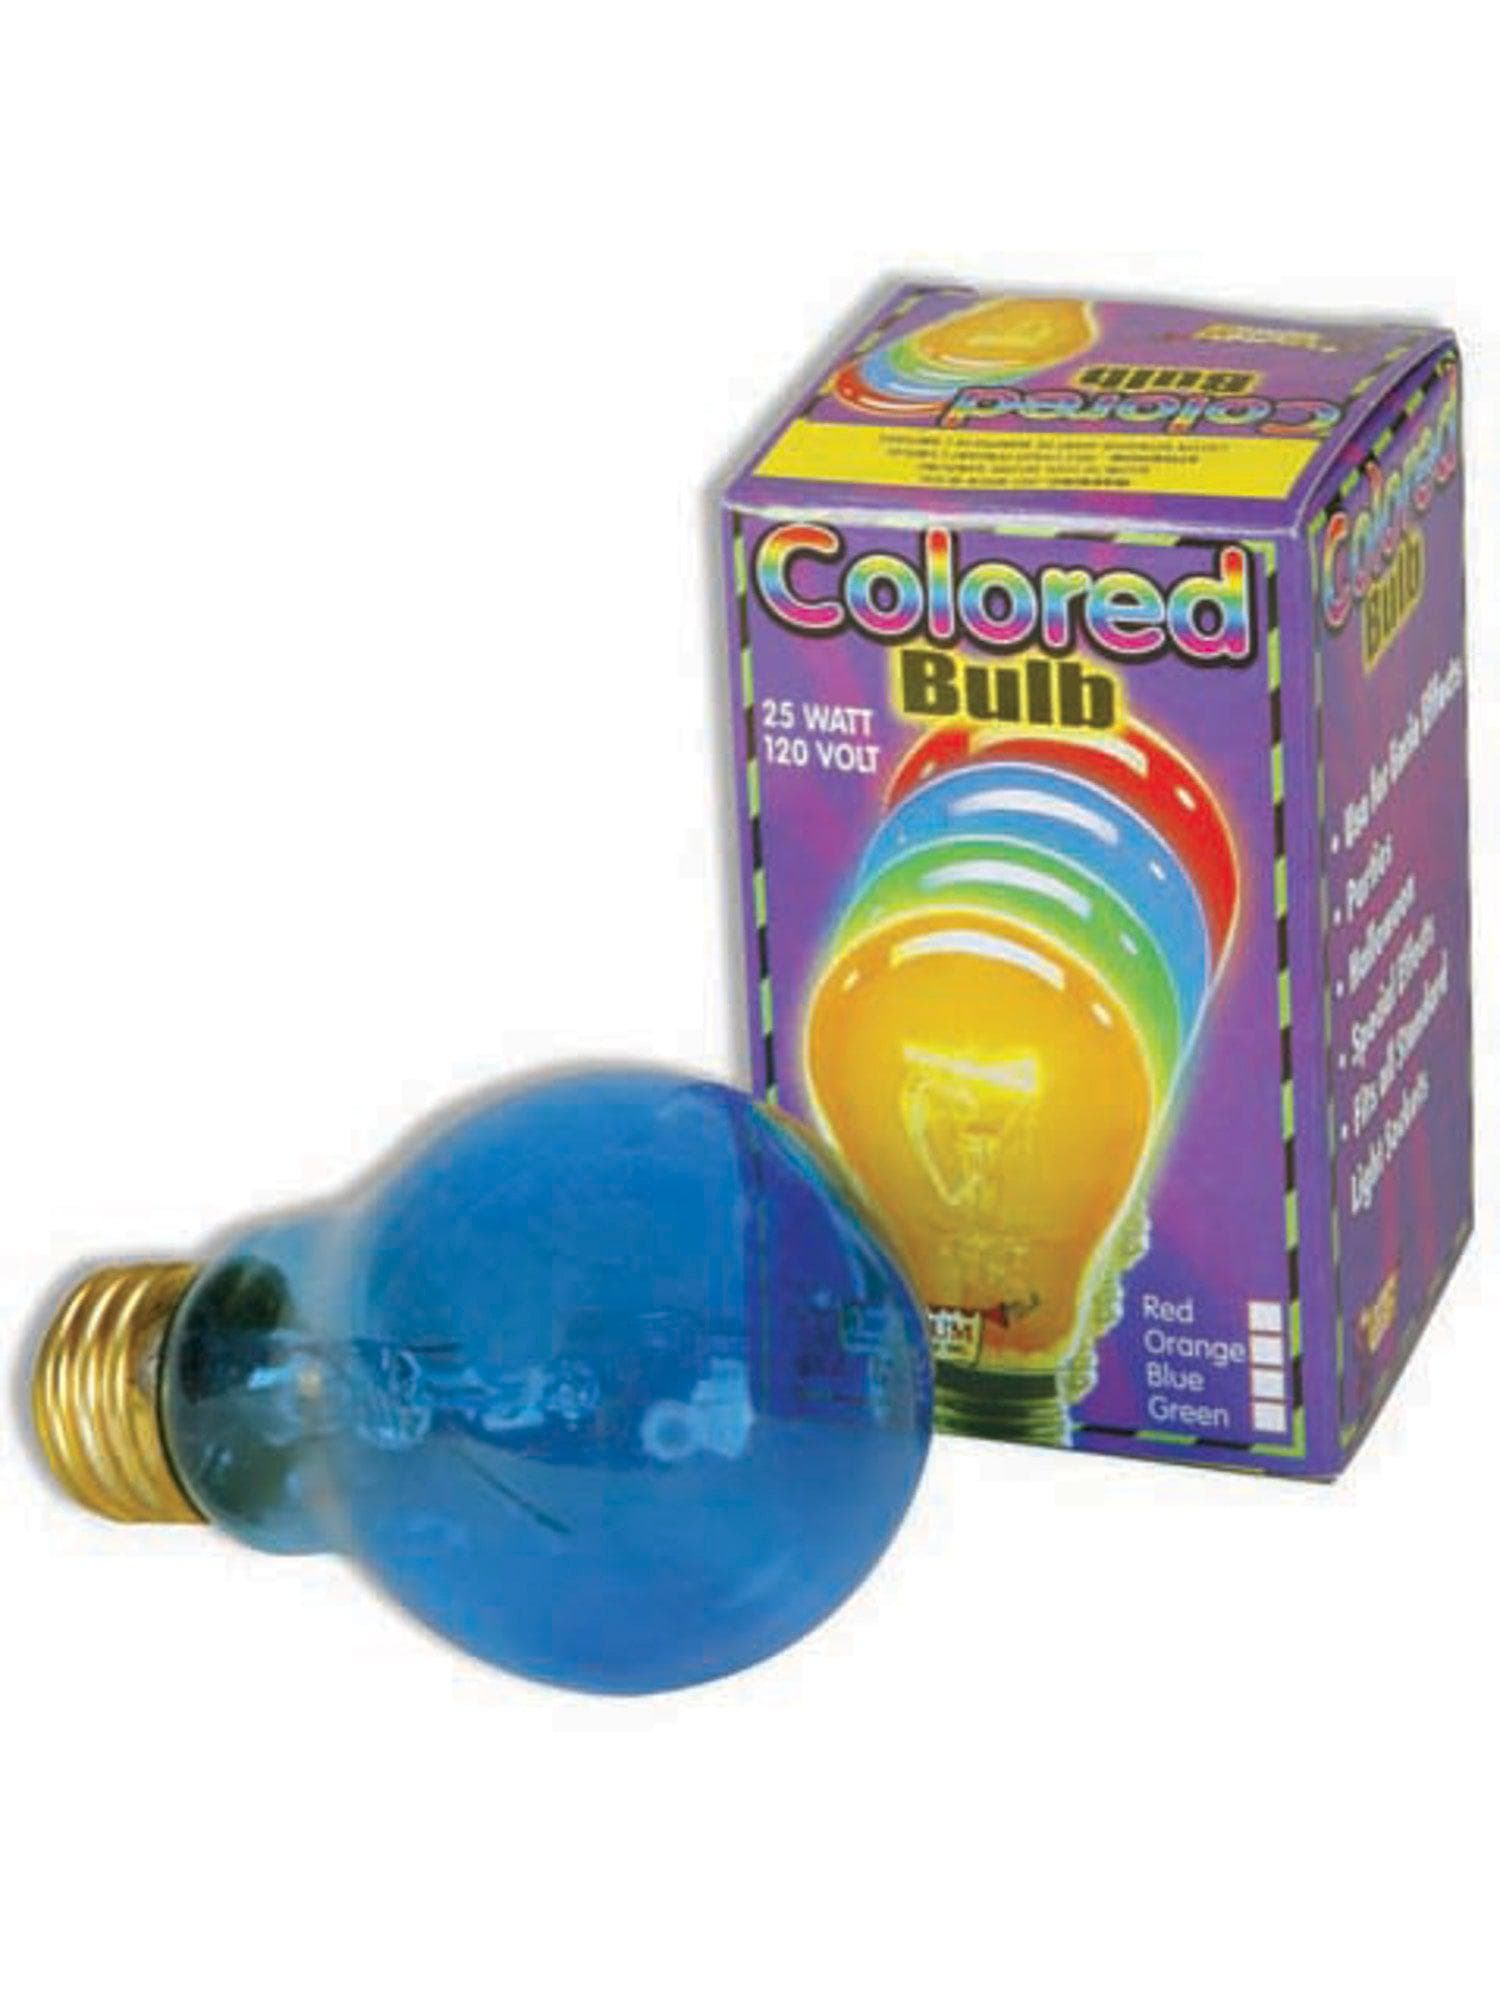 25 Watt Blue Light Bulb - costumes.com